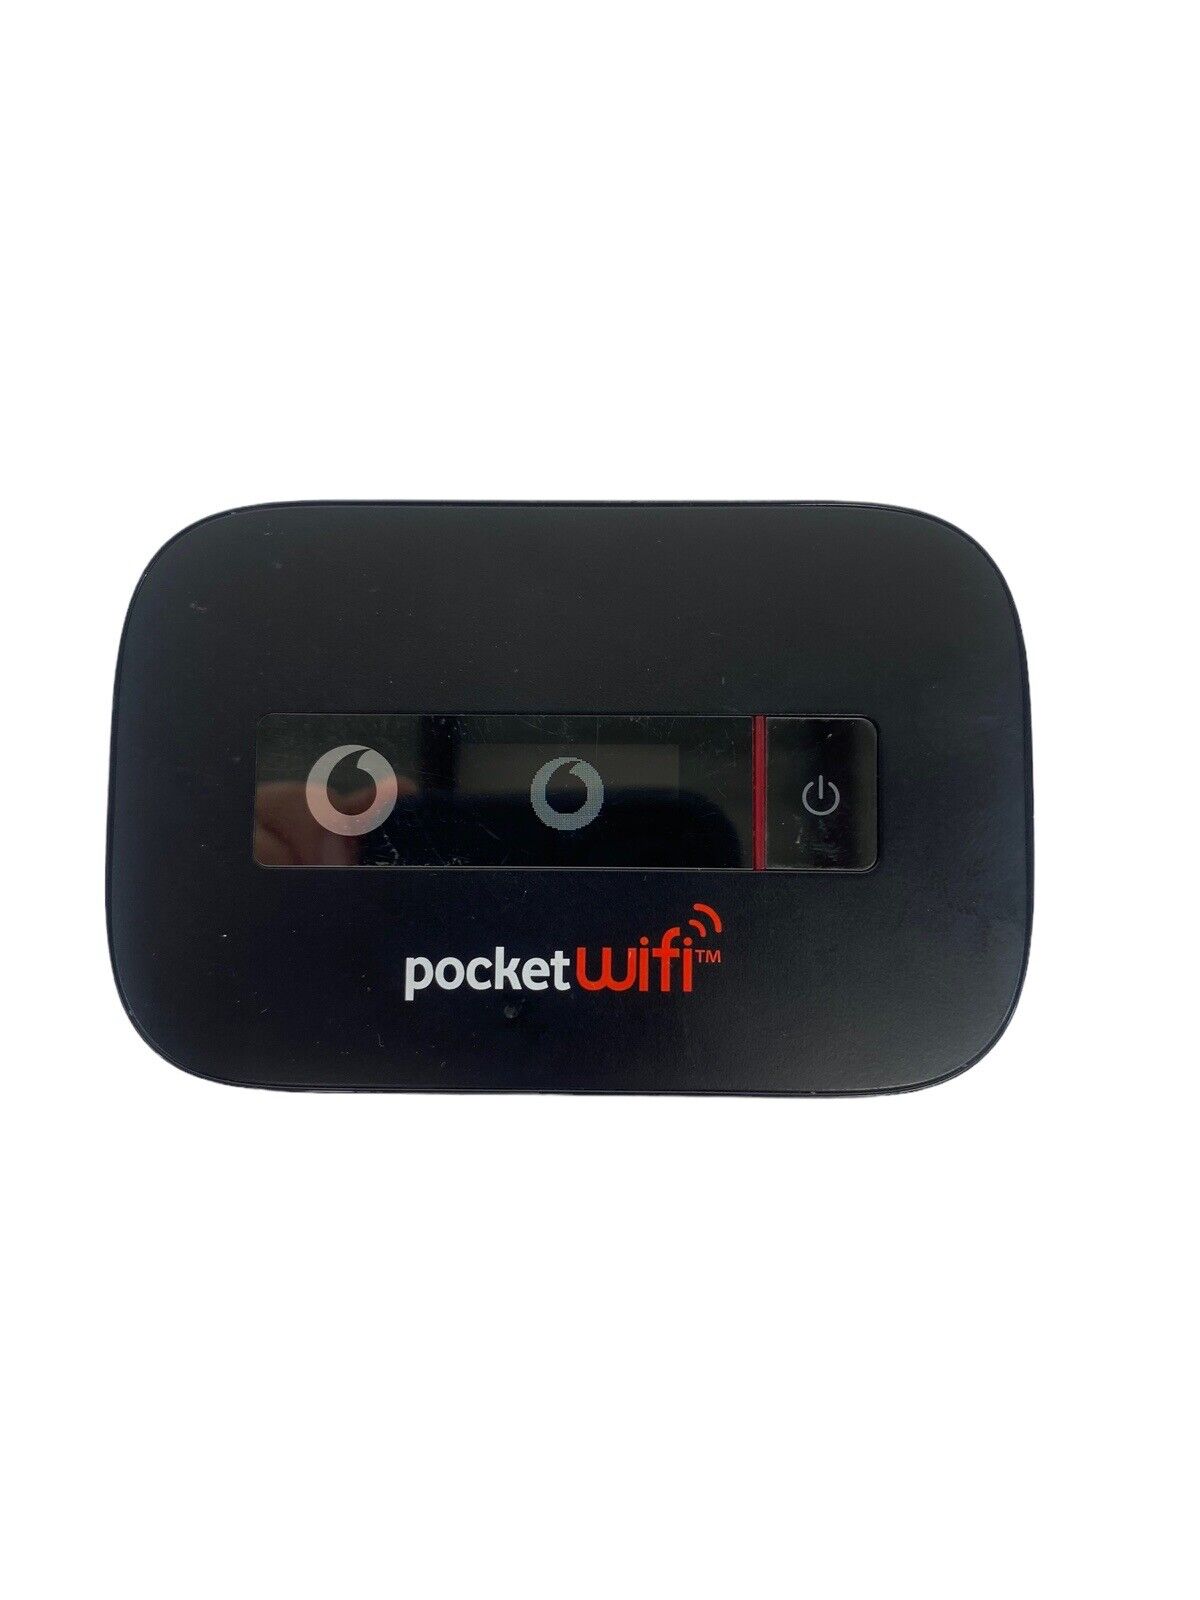 Huawei Pocket Wifi Extreme R208 Mobile Broadband Modem 3G+ Vodafone Locked